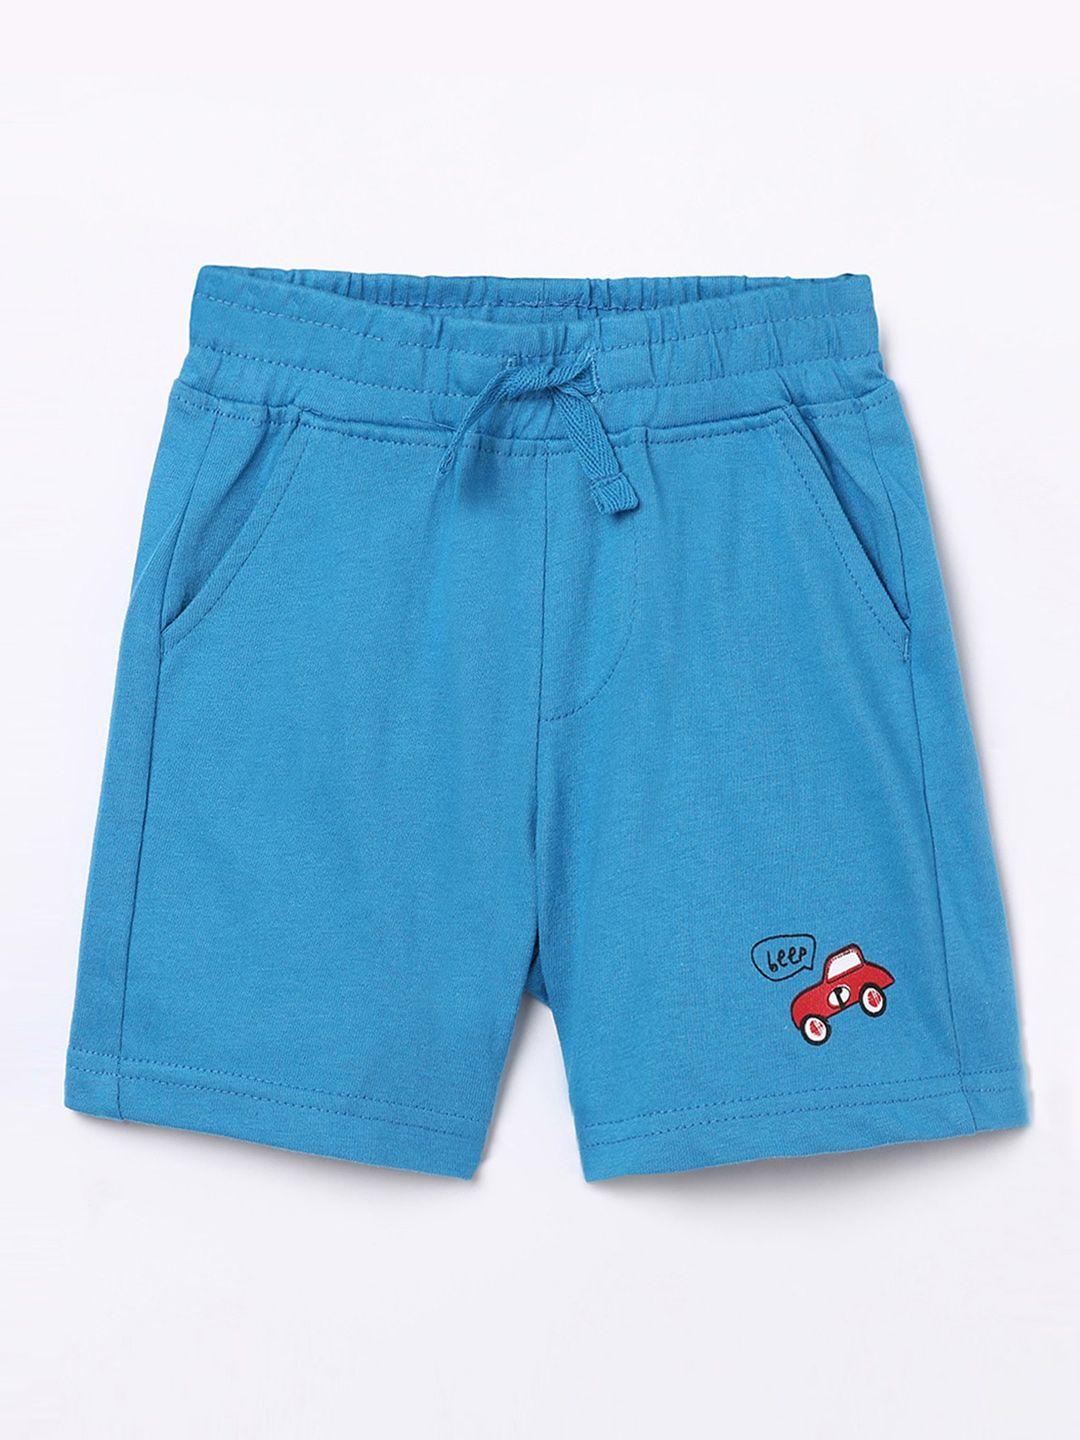 juniors boys blue printed cotton shorts